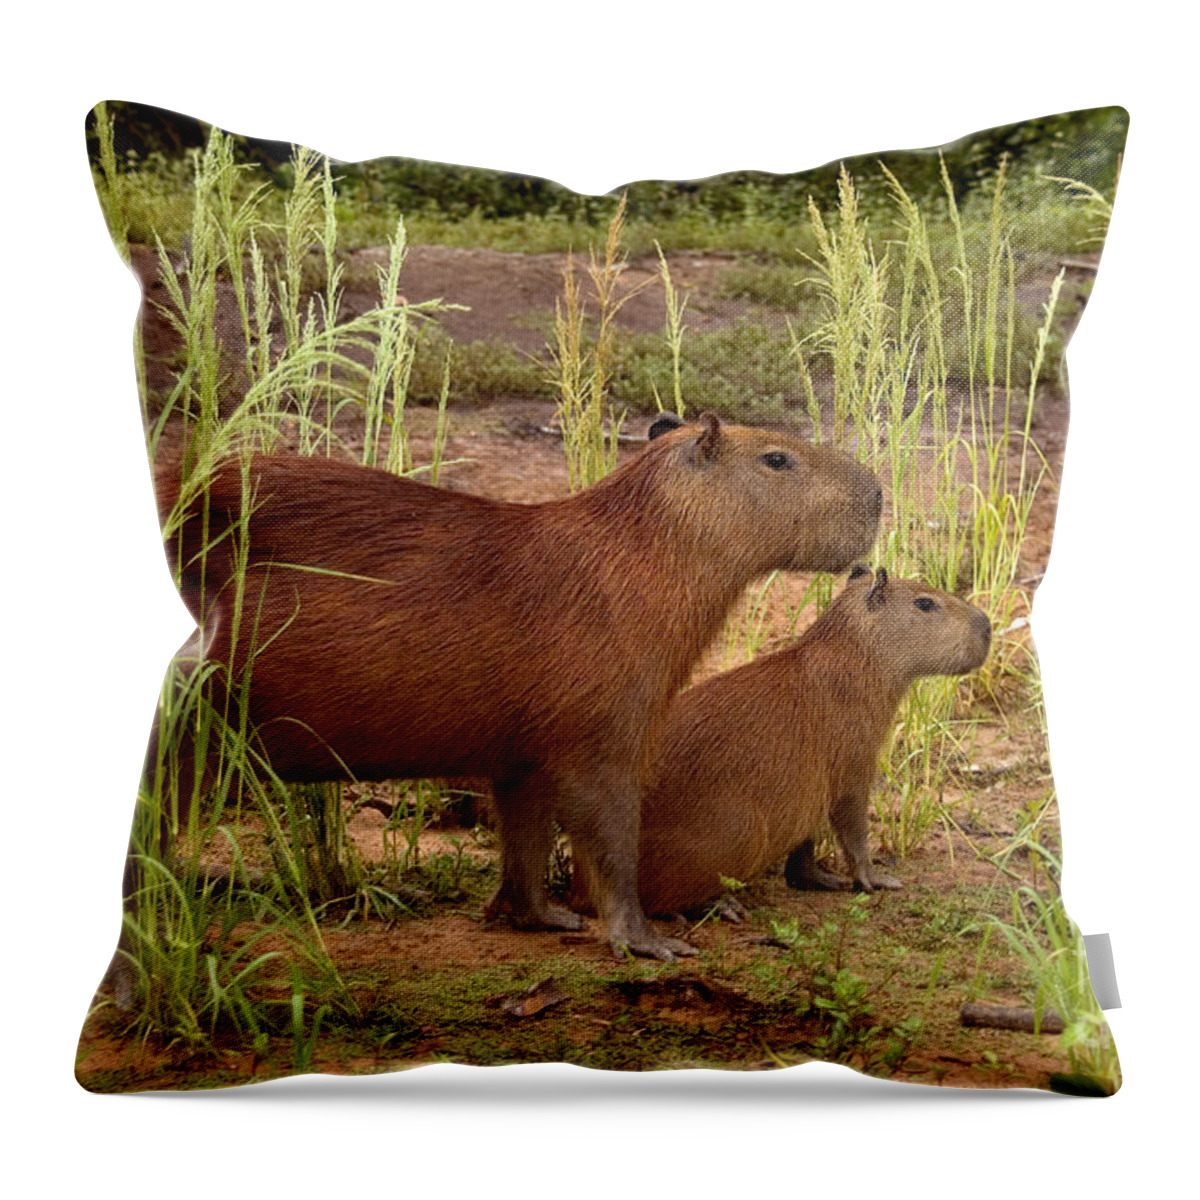 Capybara Throw Pillow featuring the photograph Capybaras In The Pantanal Of Brazil by Gregory G. Dimijian, M.D.